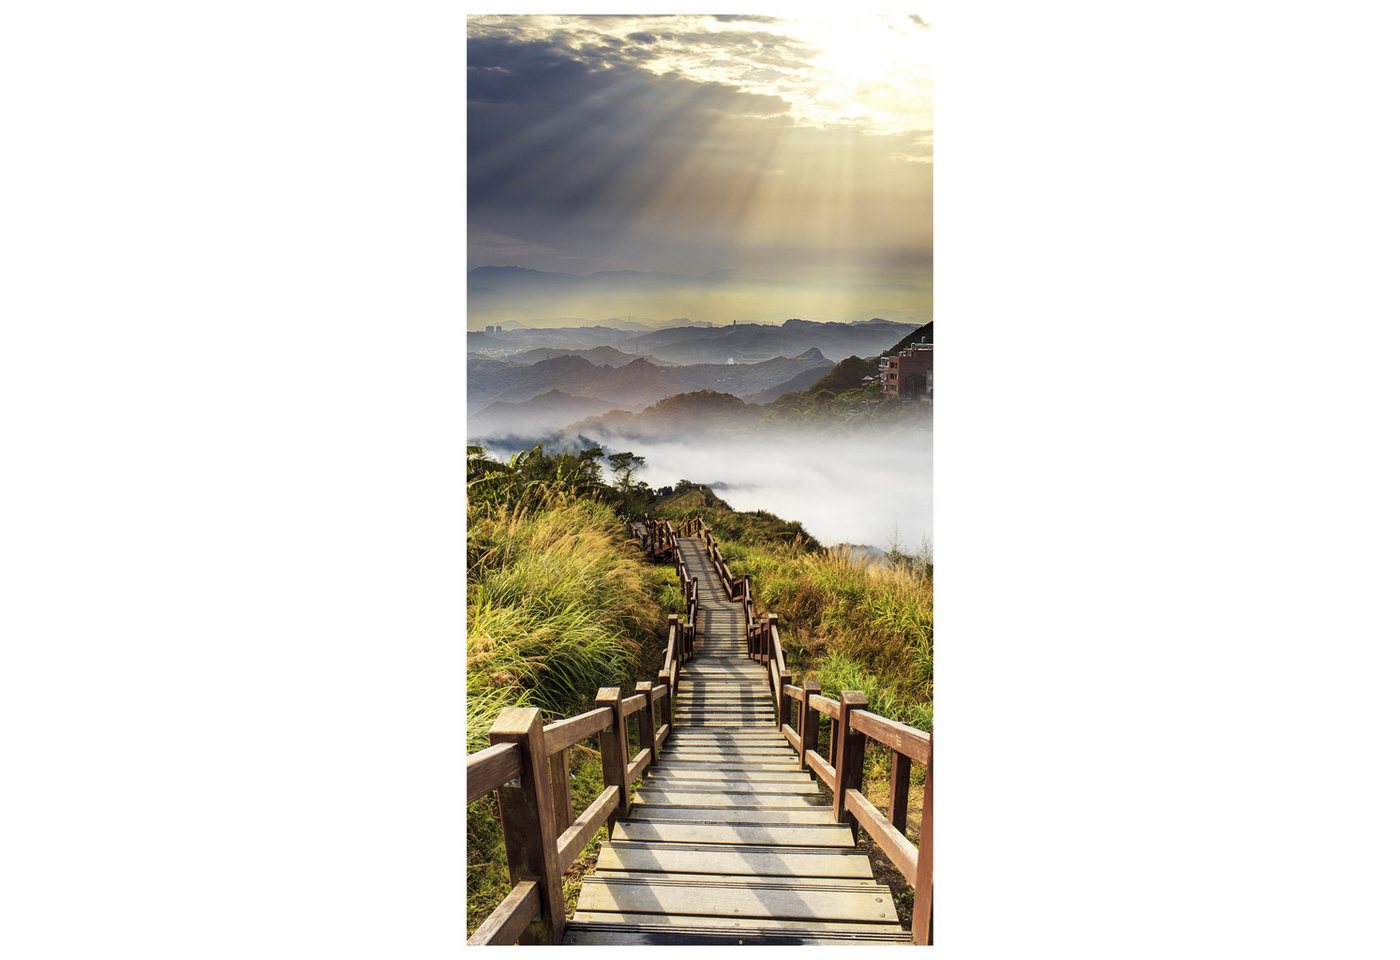 wandmotiv24 Türtapete Treppe auf Berggipfel, Sonne, Wolken, glatt, Fototapete, Wandtapete, Motivtapete, matt, selbstklebende Vliestapete von wandmotiv24